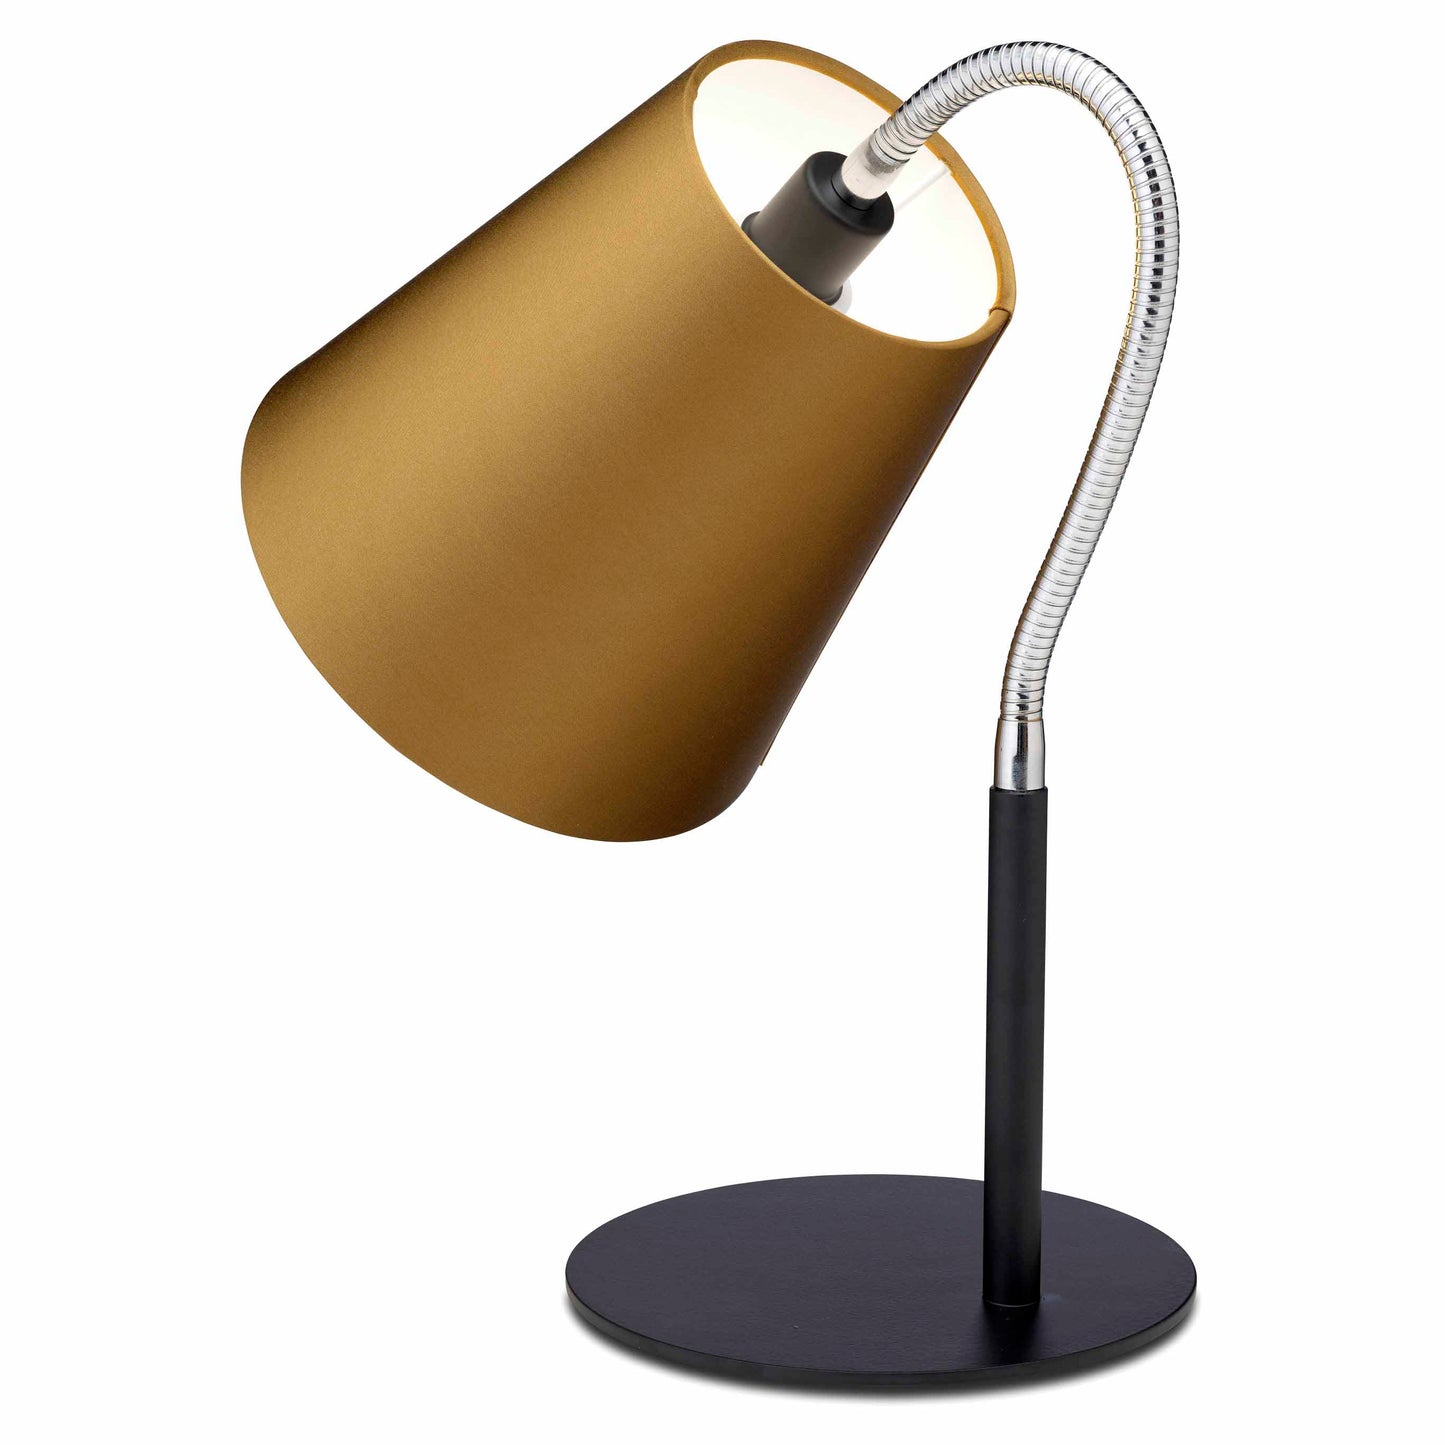 Toronto Table Lamp